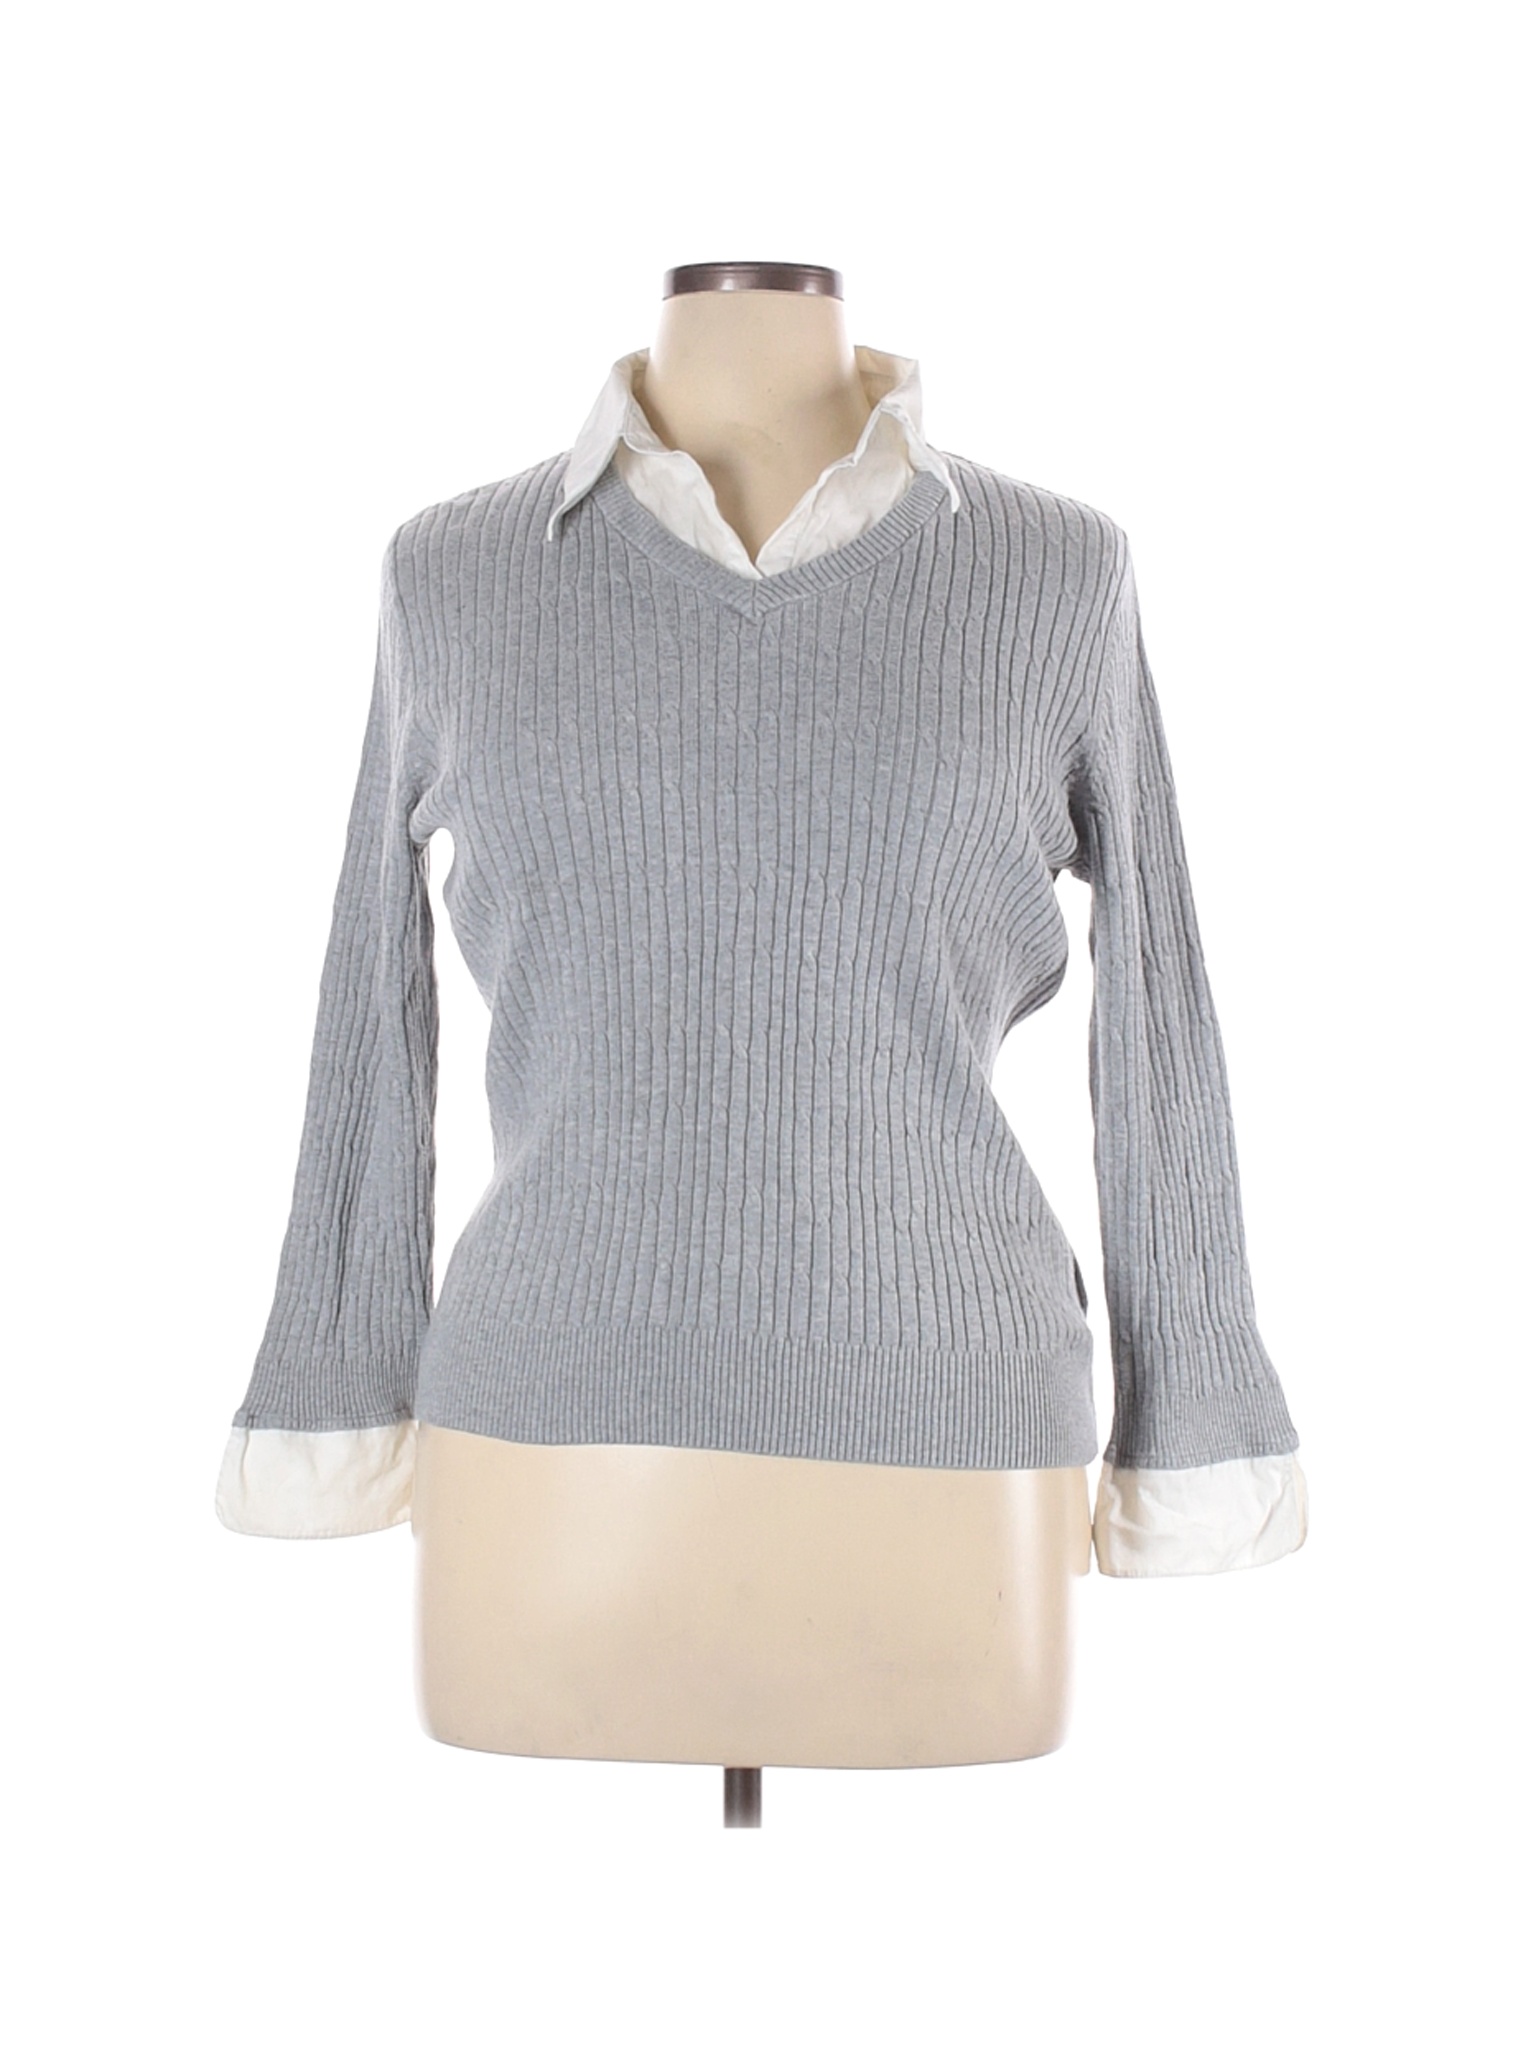 Croft & Barrow Women Gray Pullover Sweater L | eBay